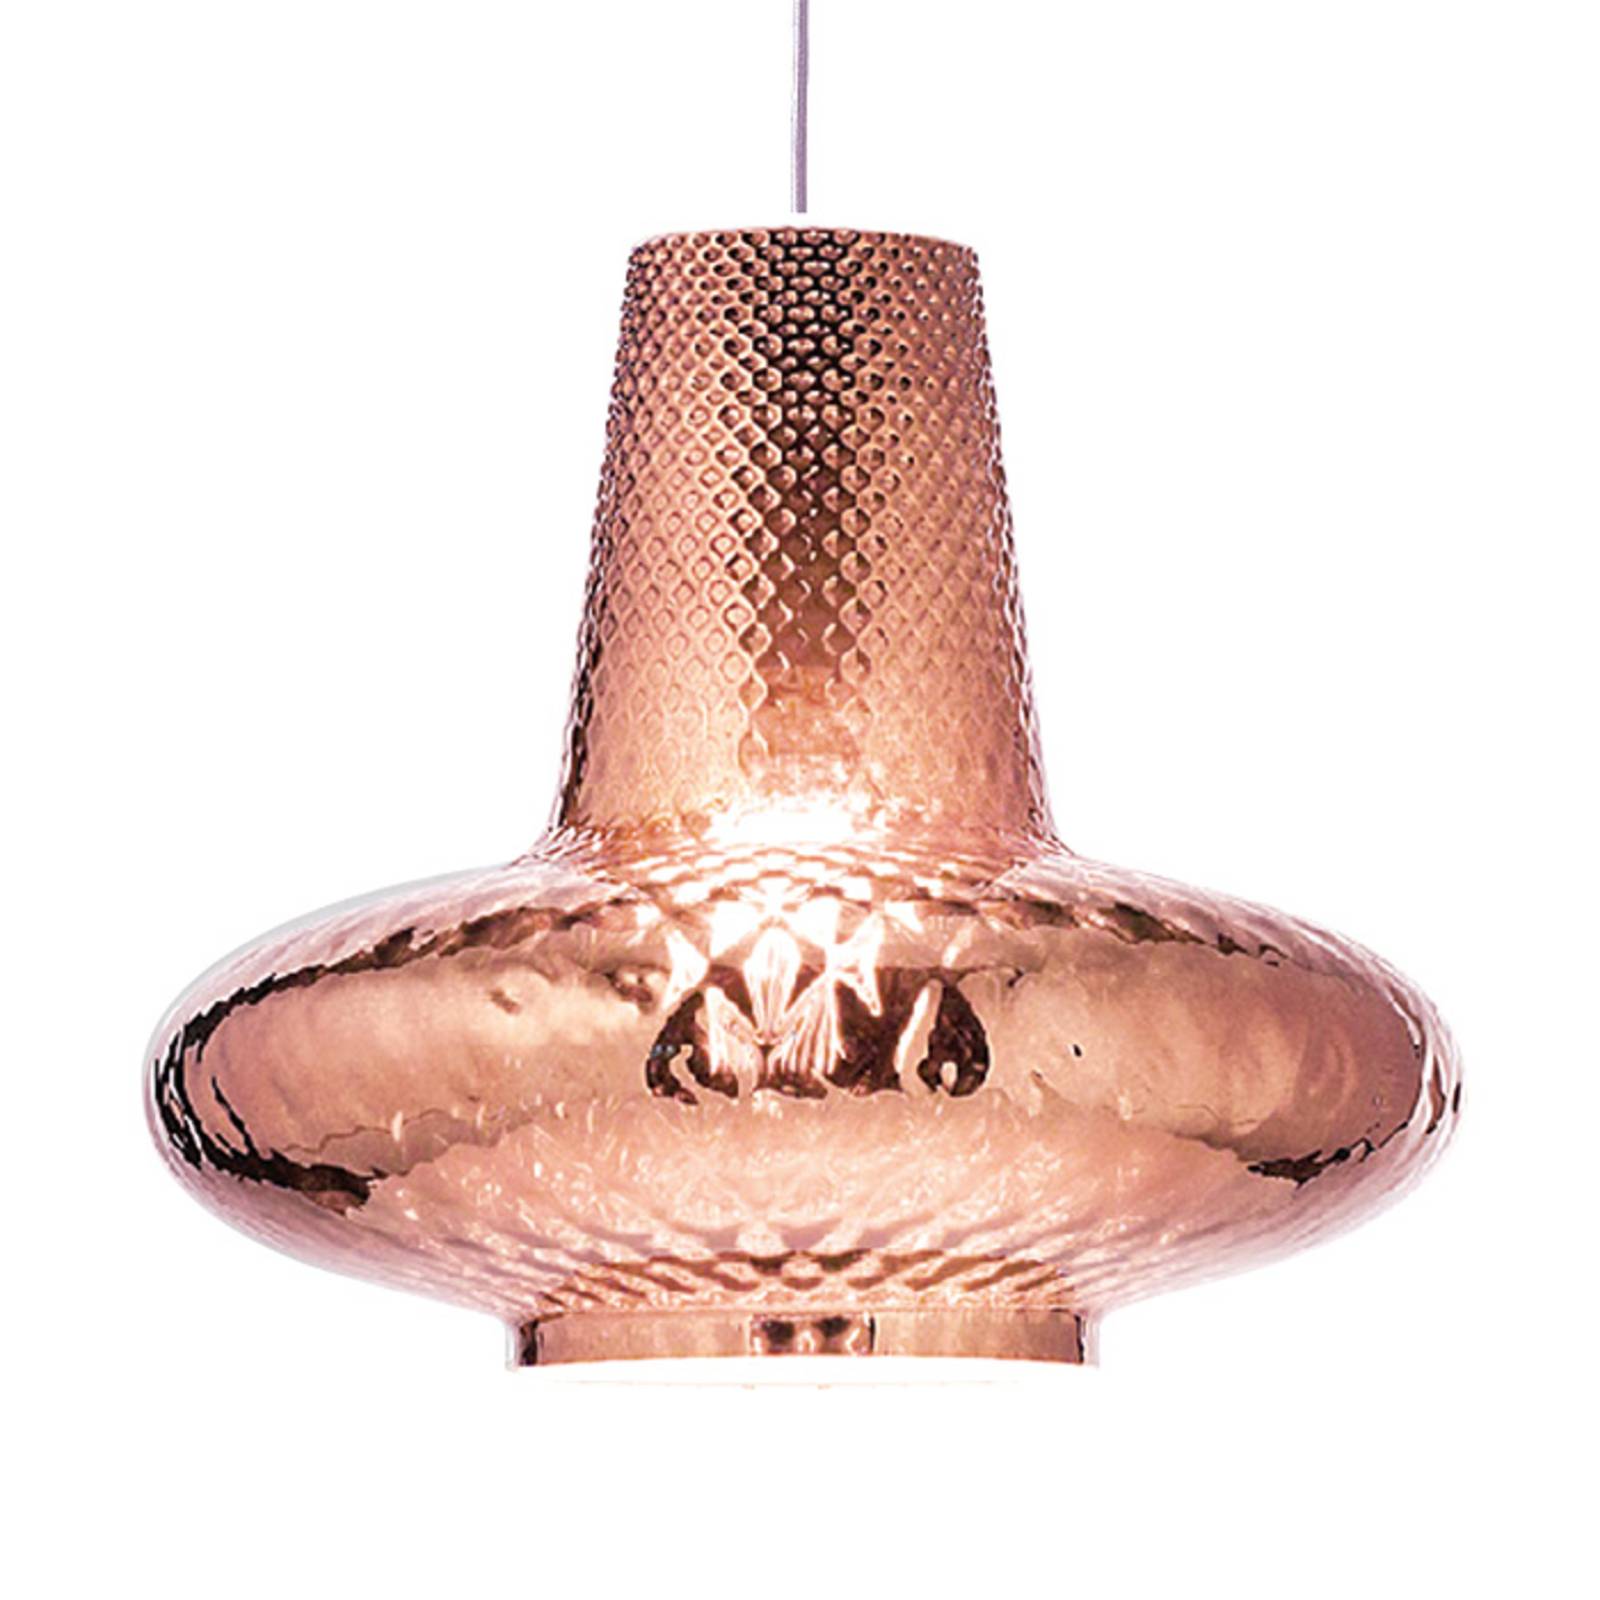 Hanglamp Giulietta 130 cm rosé goud metallic